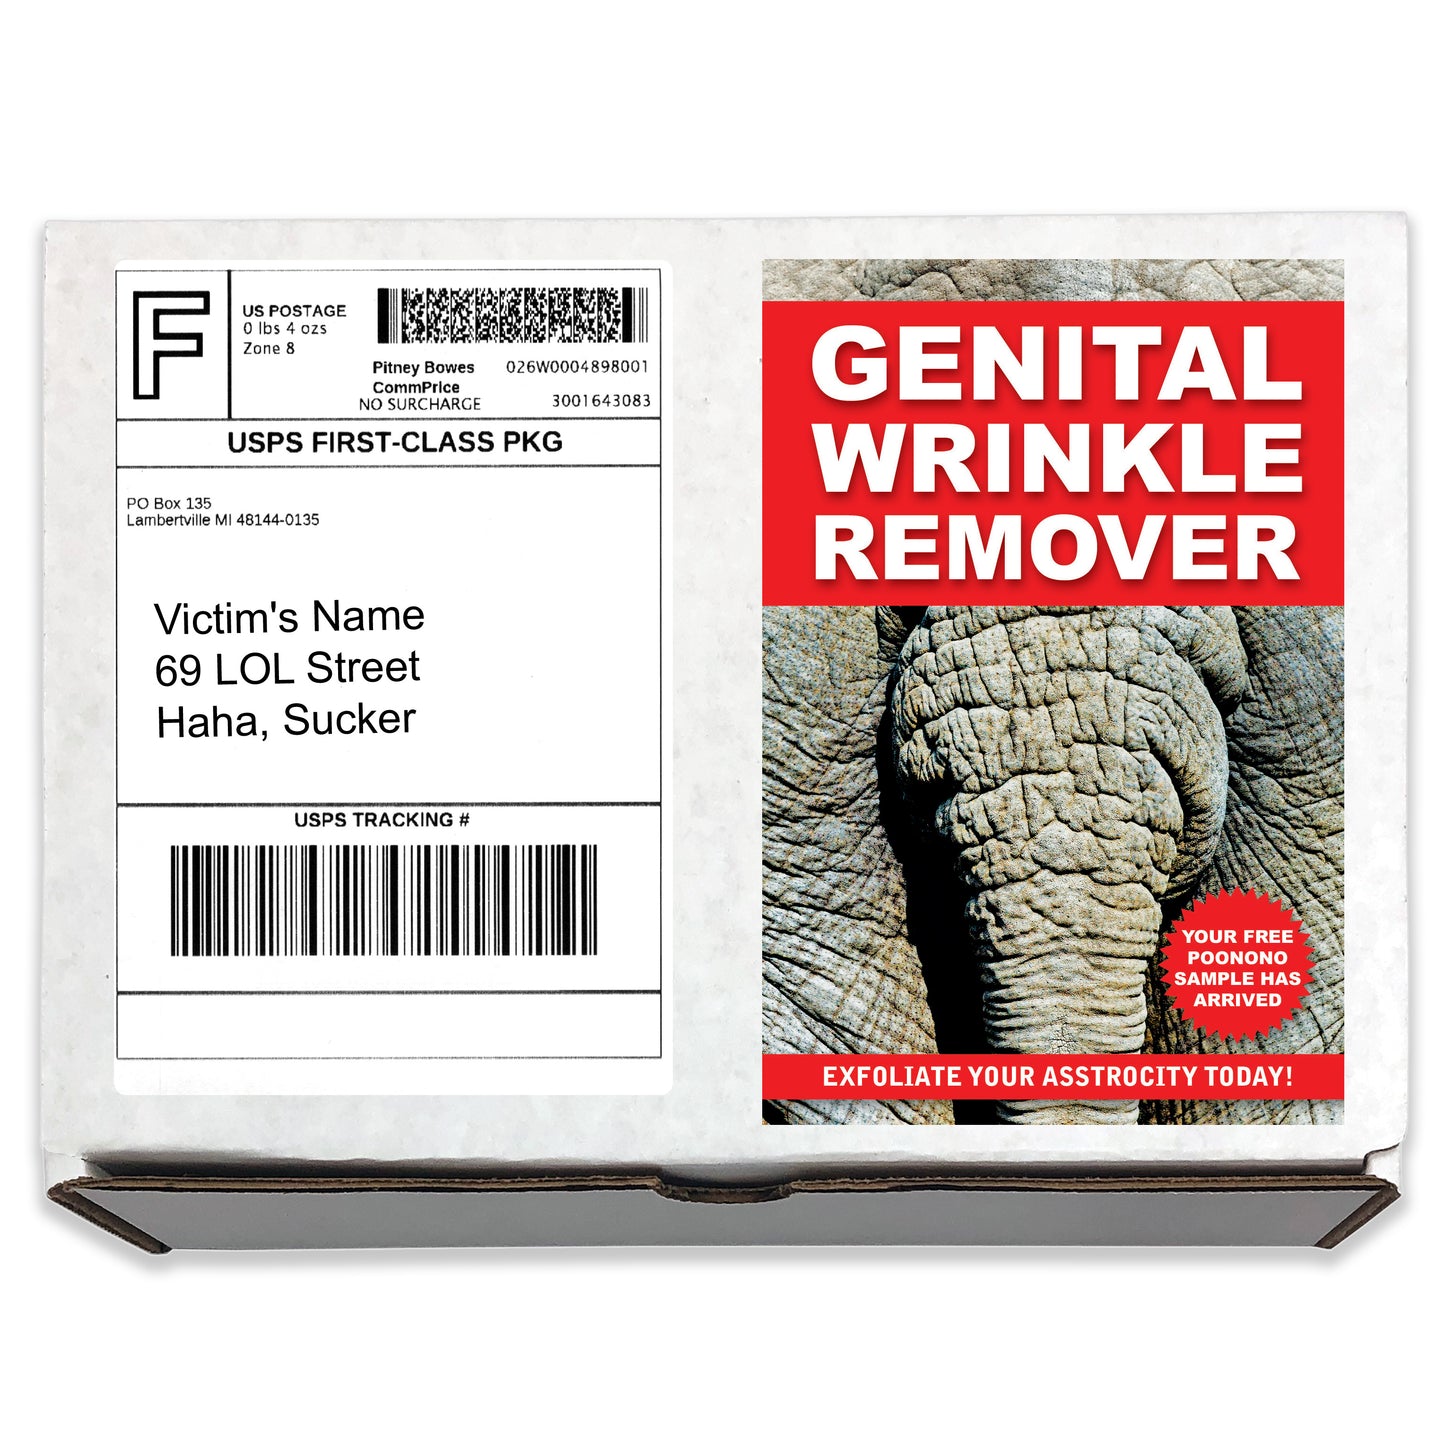 Genital Wrinkle Remover Prank Mail